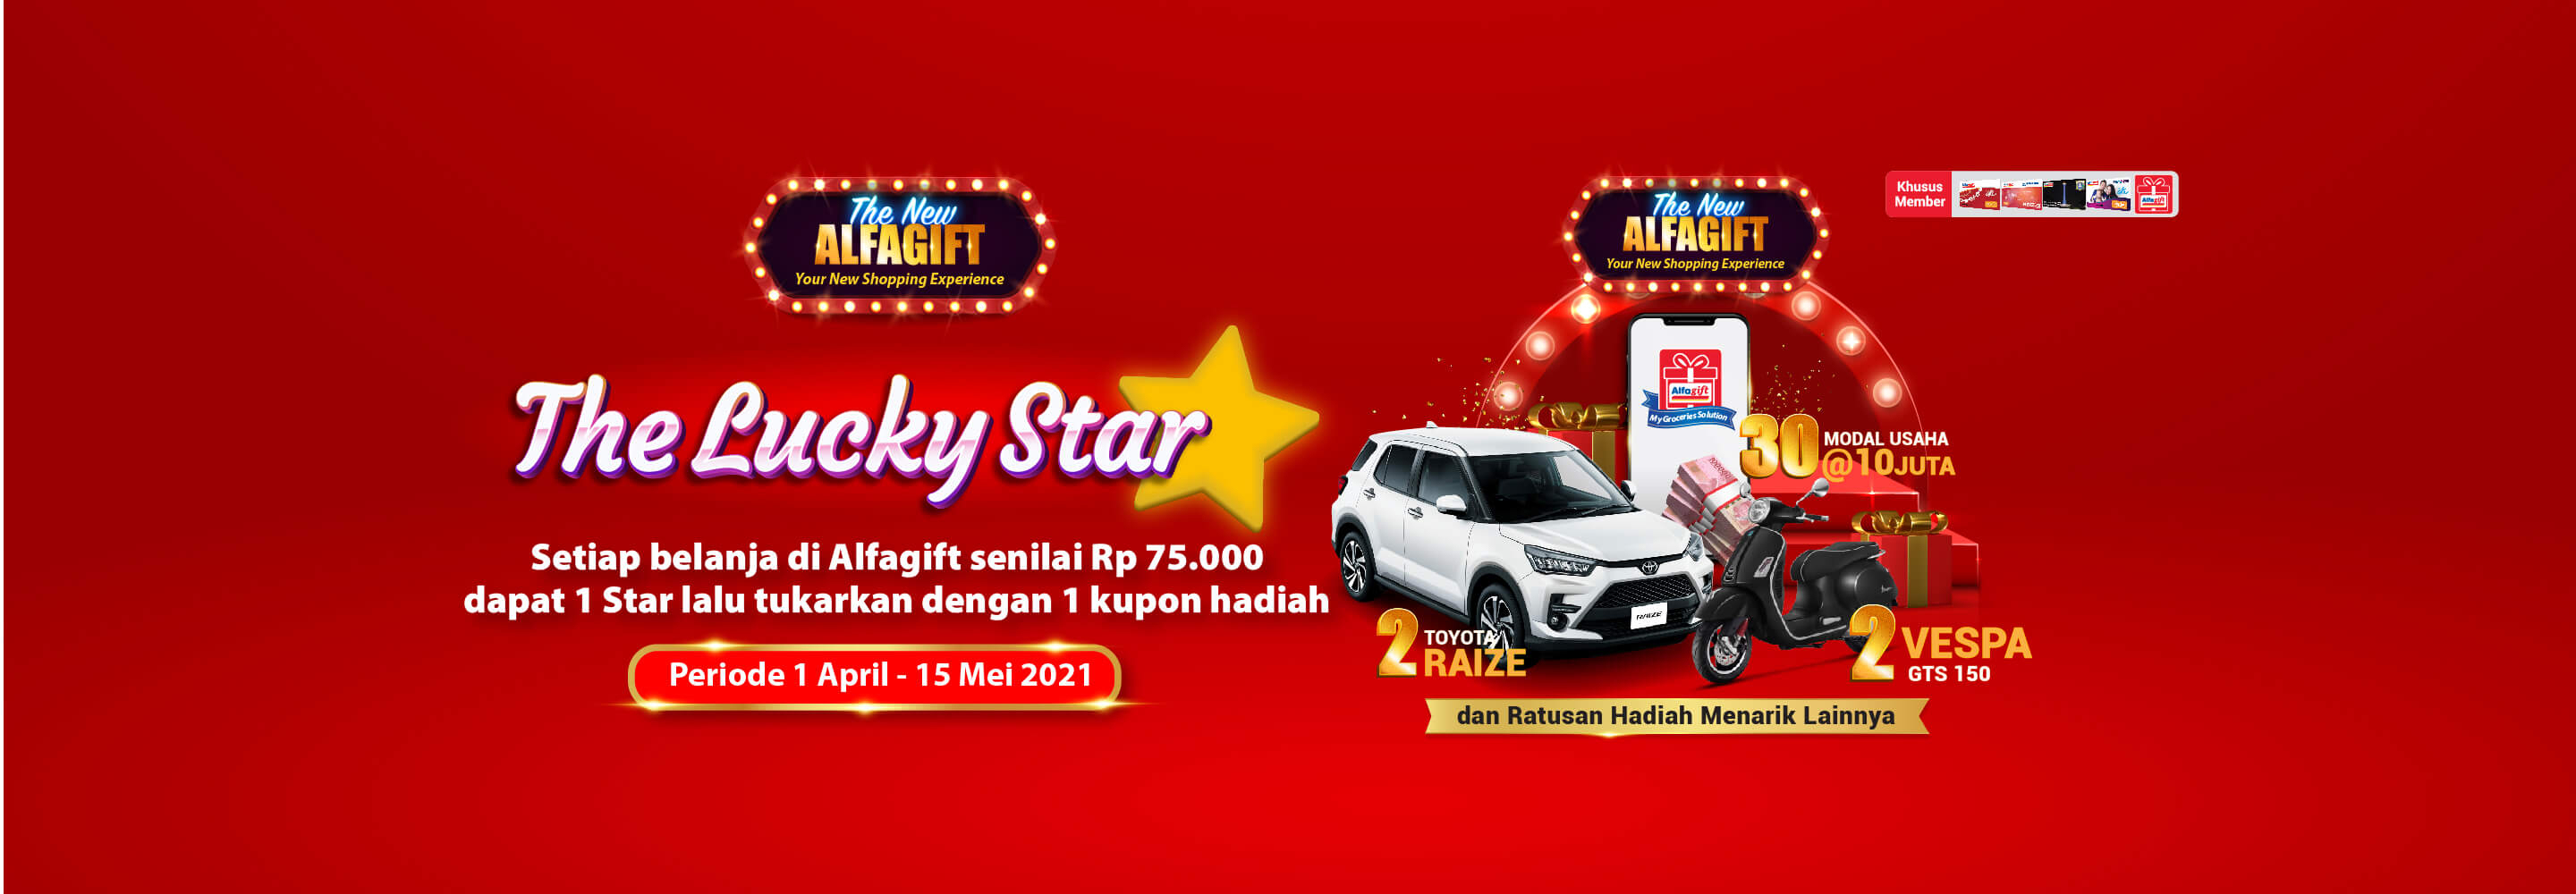 Promo The Lucky Star Alfamart